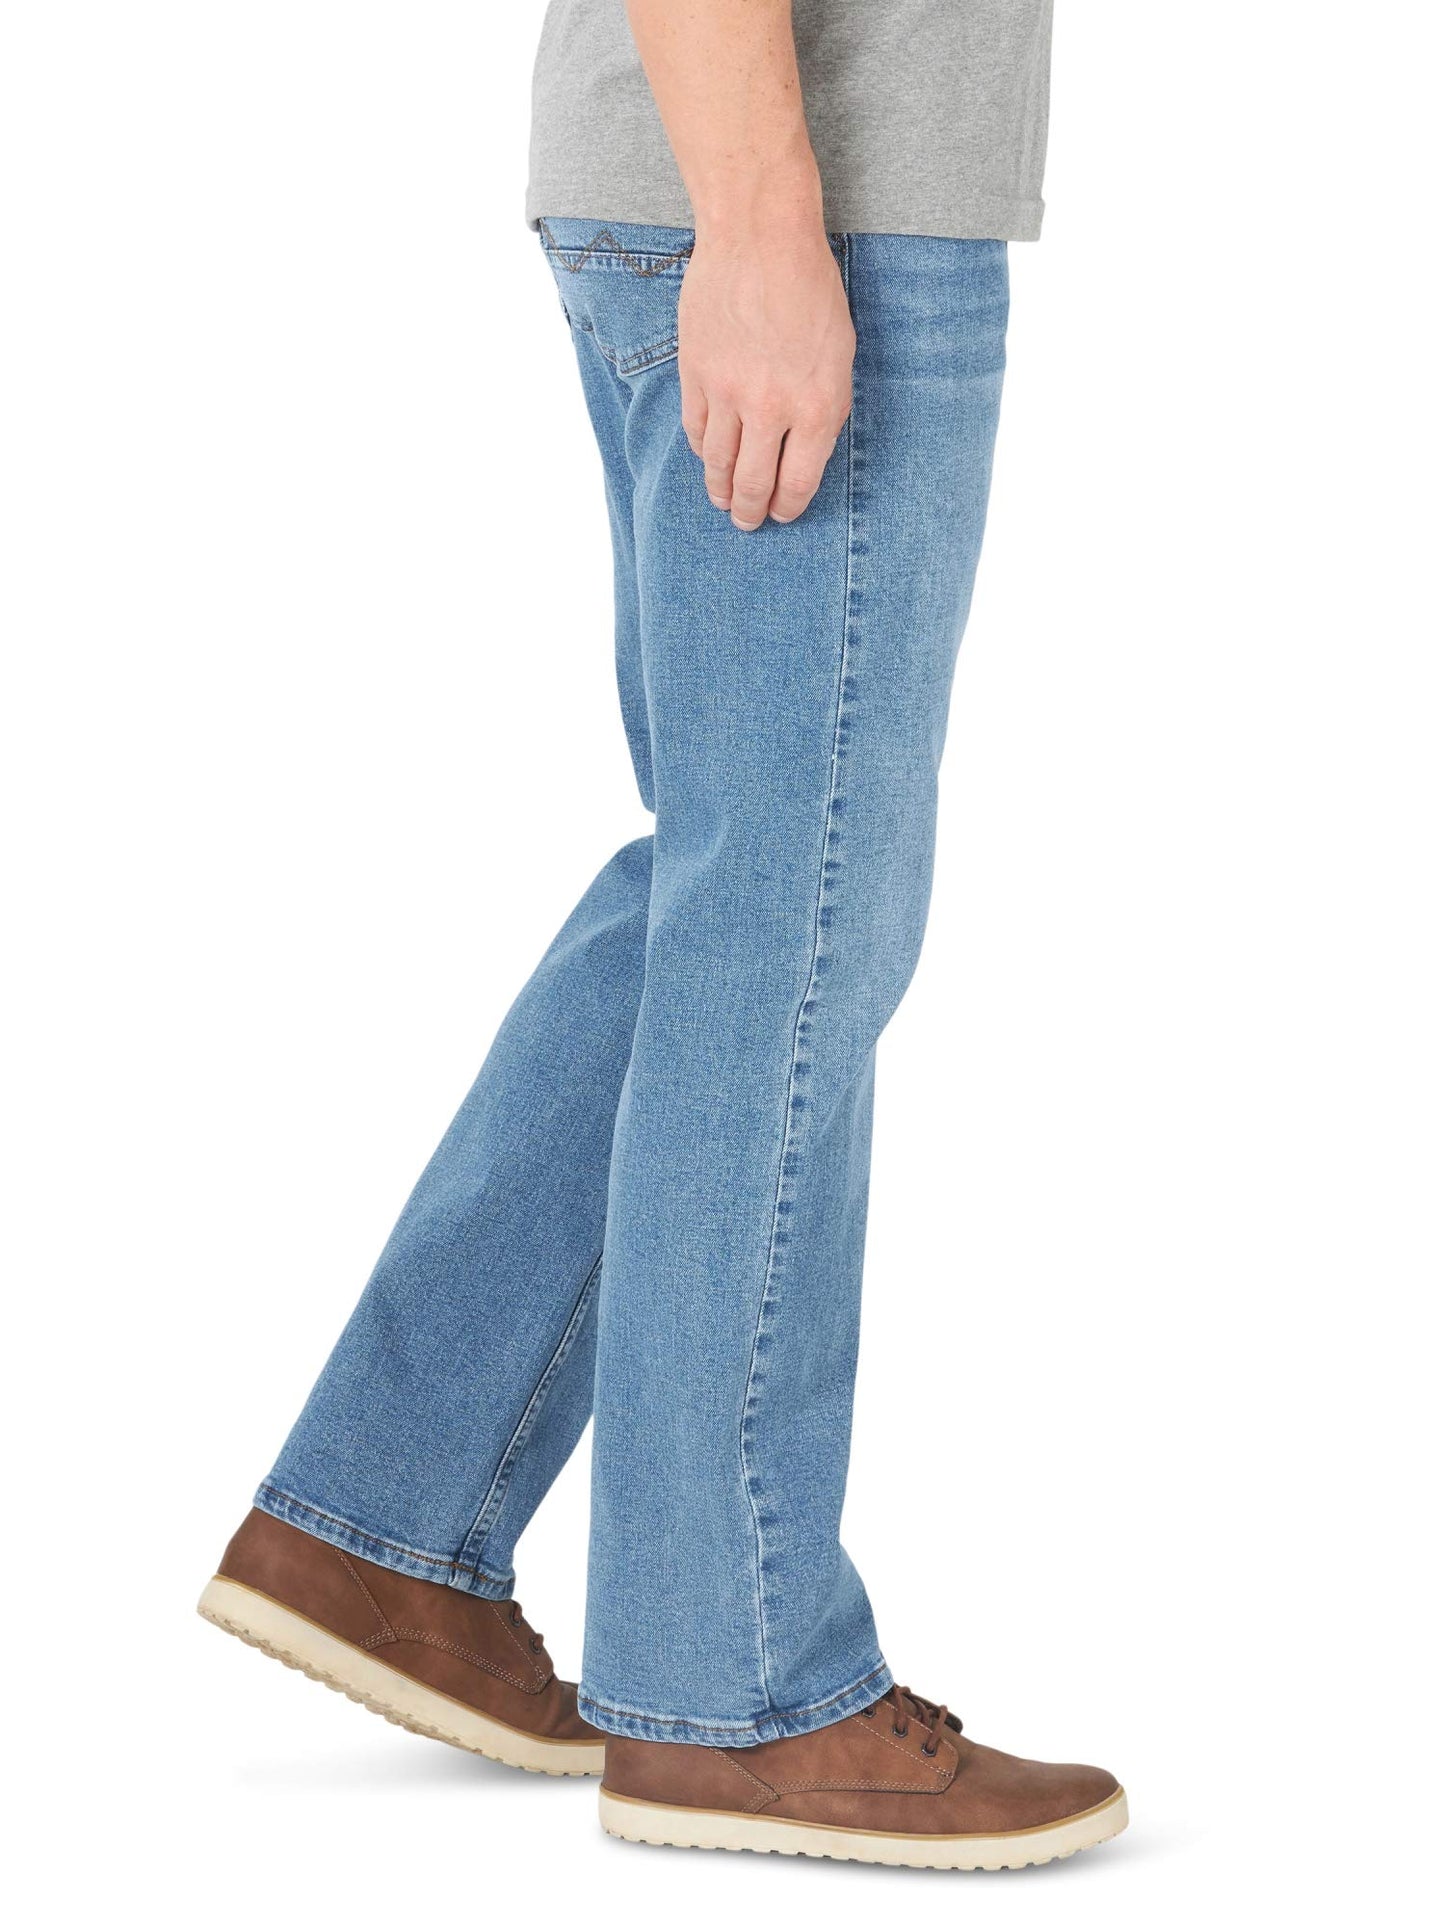 Five Star Premium Slim Straight Jeans (32x32, Clayton)